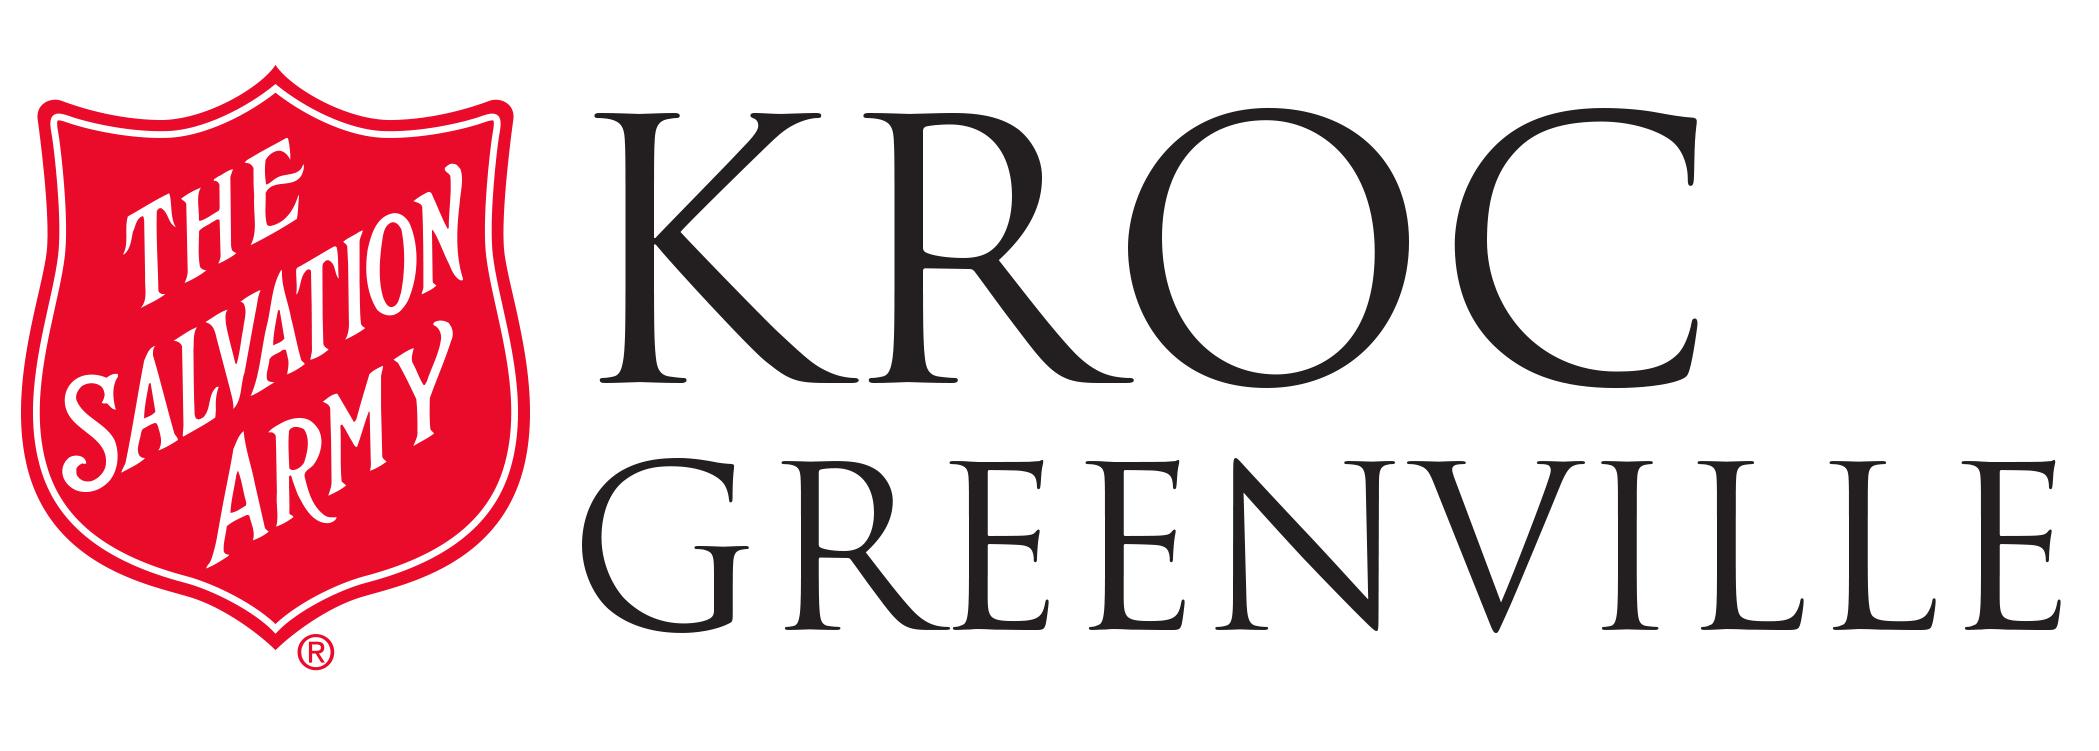 Kroc Logo - Kroc Greenville – Center of fun, fitness, family, & faith.